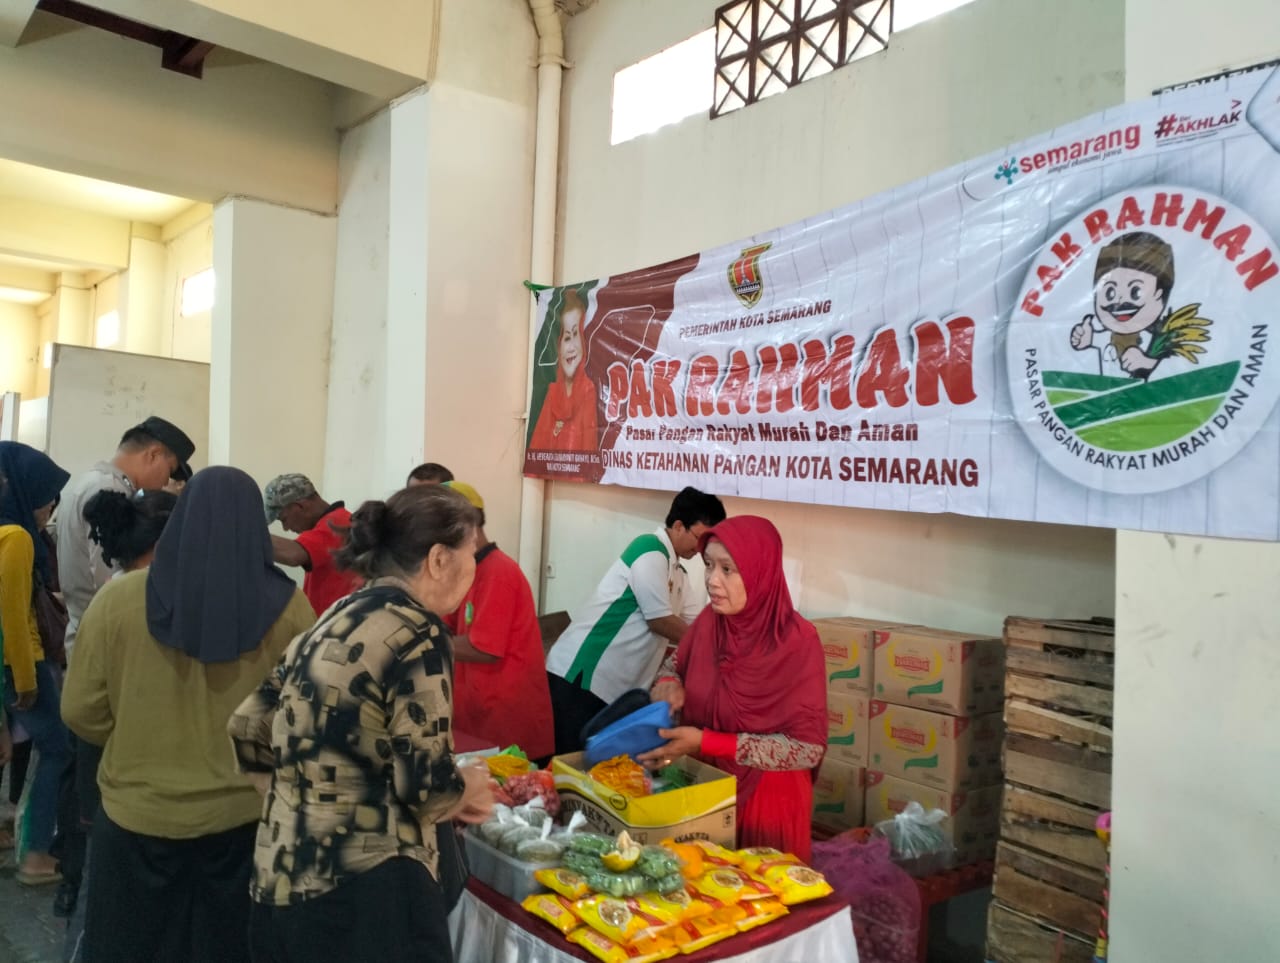 Pasar Pangan Murah dan Aman (Pak Rahman) di Klenteng Hok Sing Bio